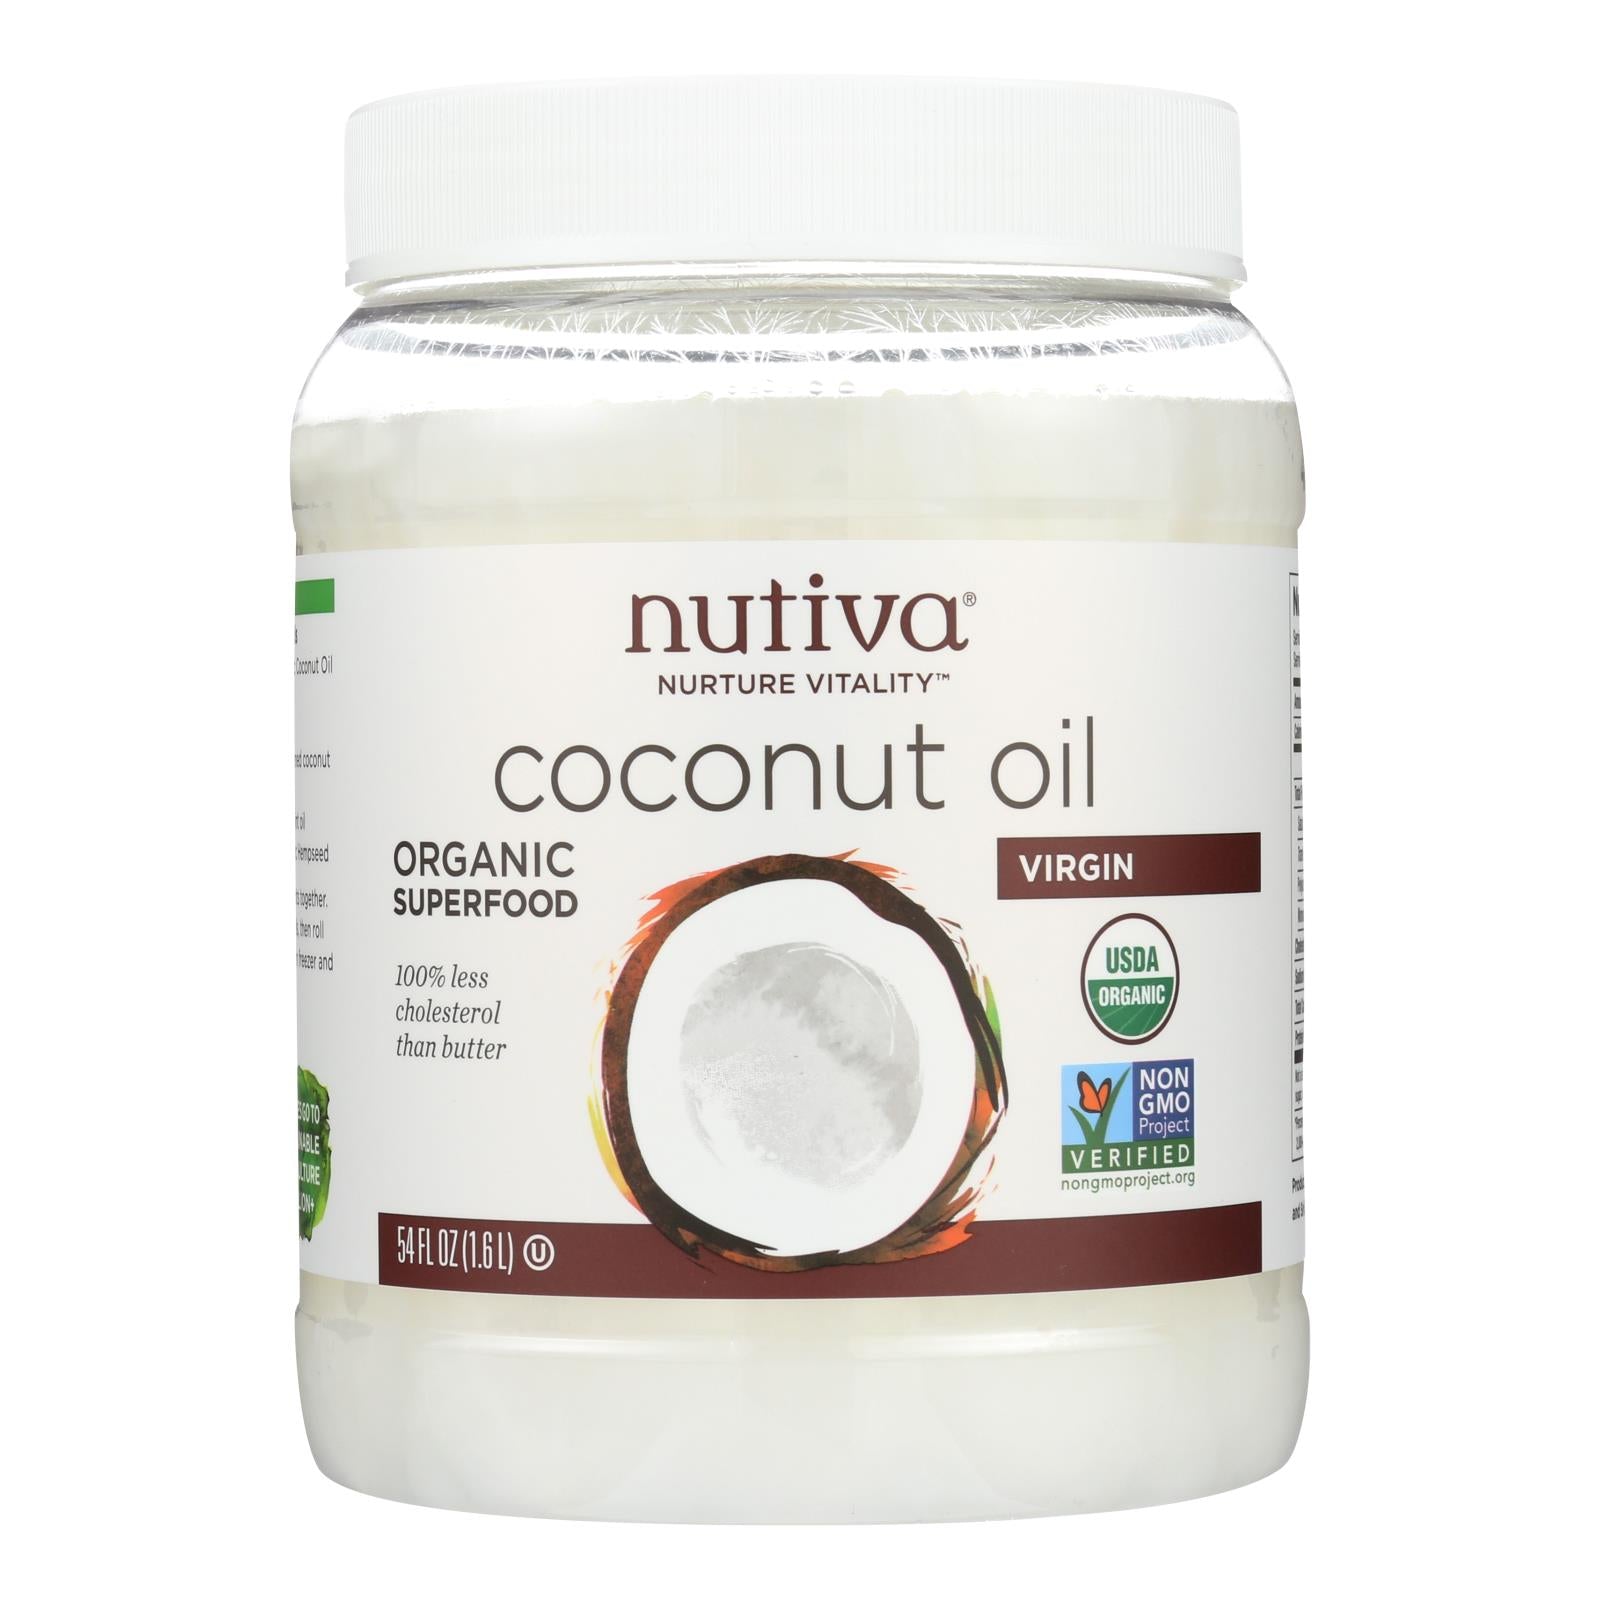 Nutiva Organic MCT Oil, 32 fl. oz.